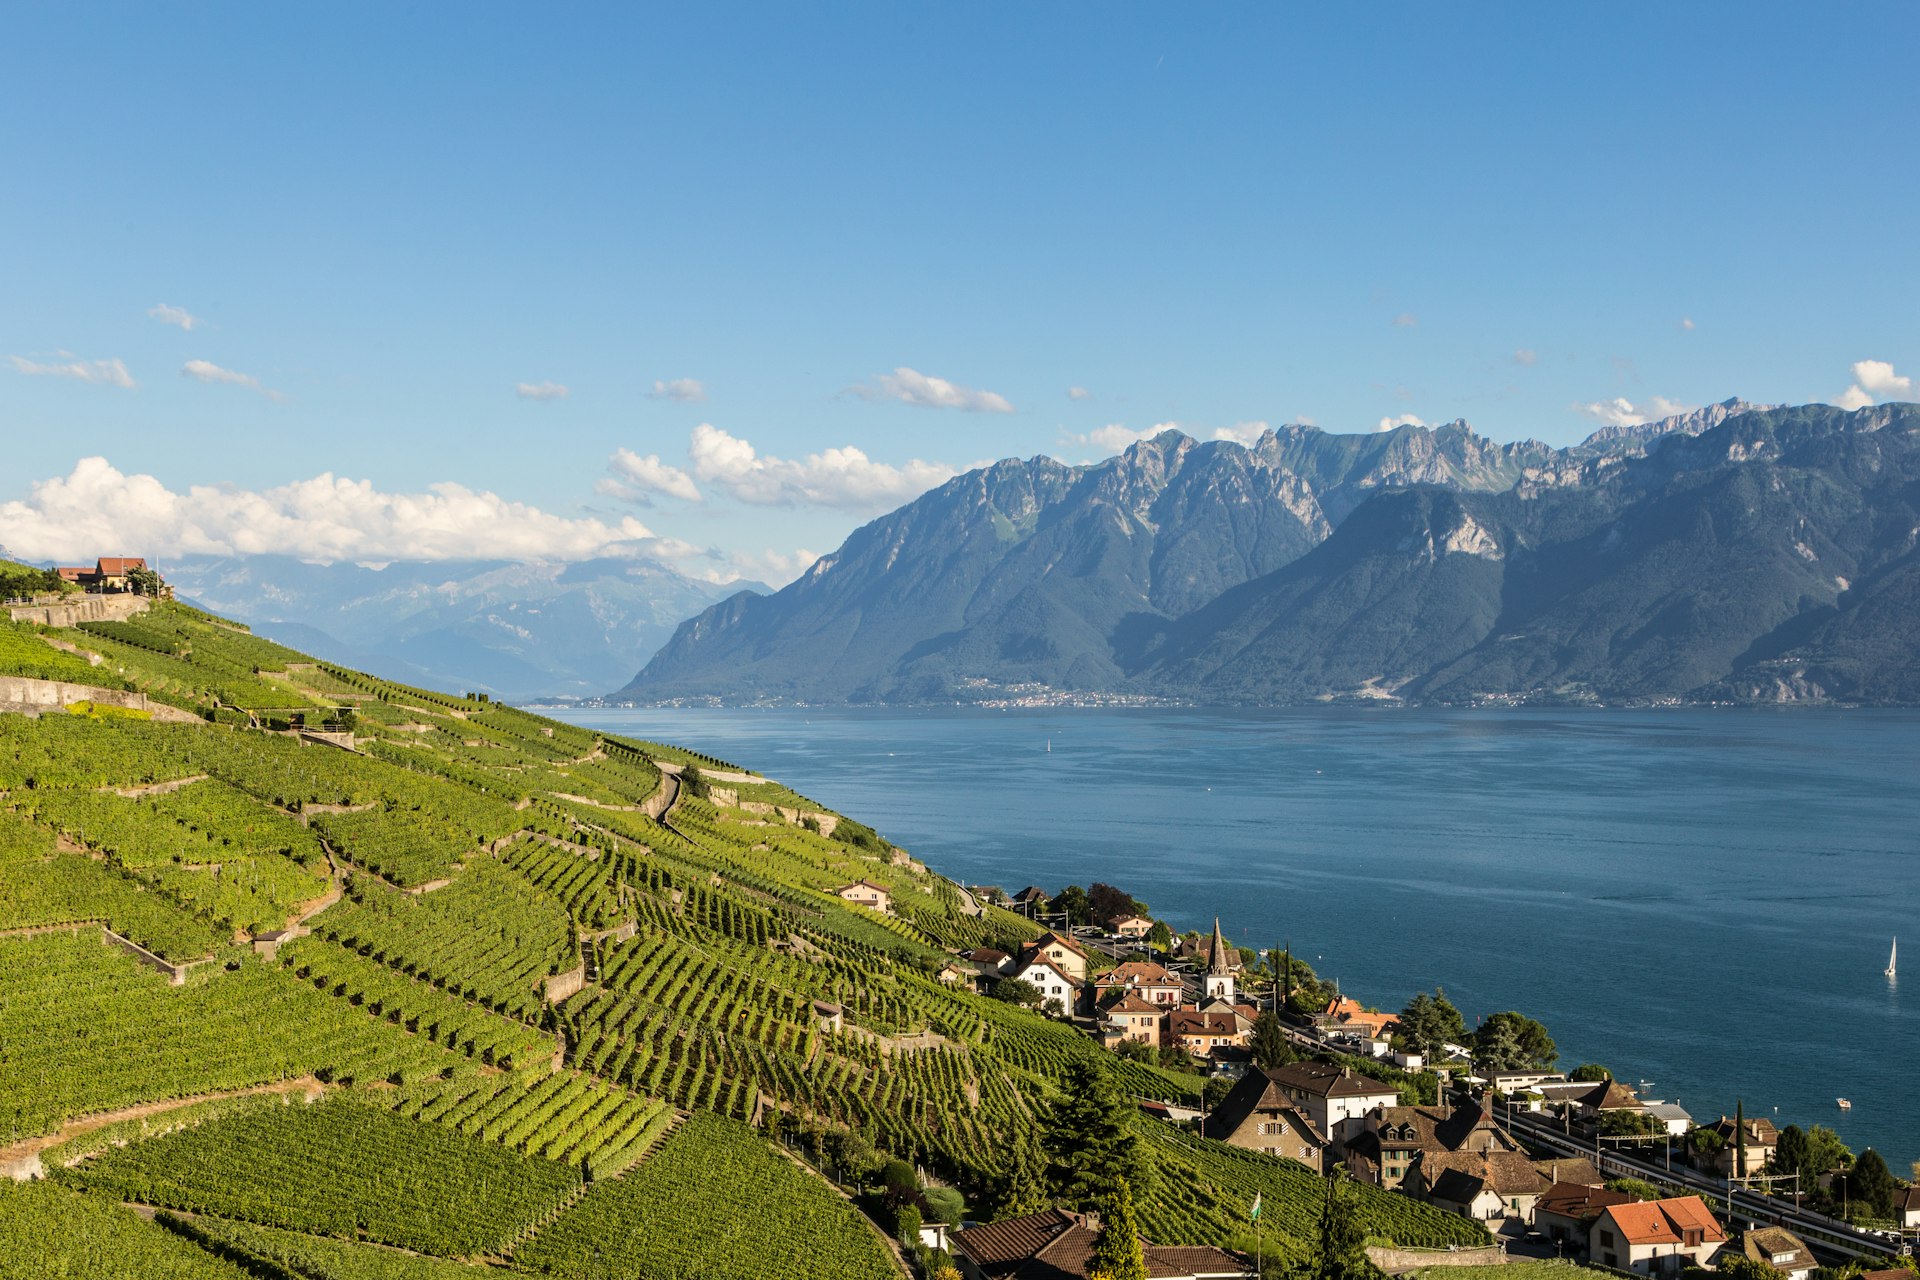 Vineyards in the Lavaux region near Lake Geneva, Switzerland